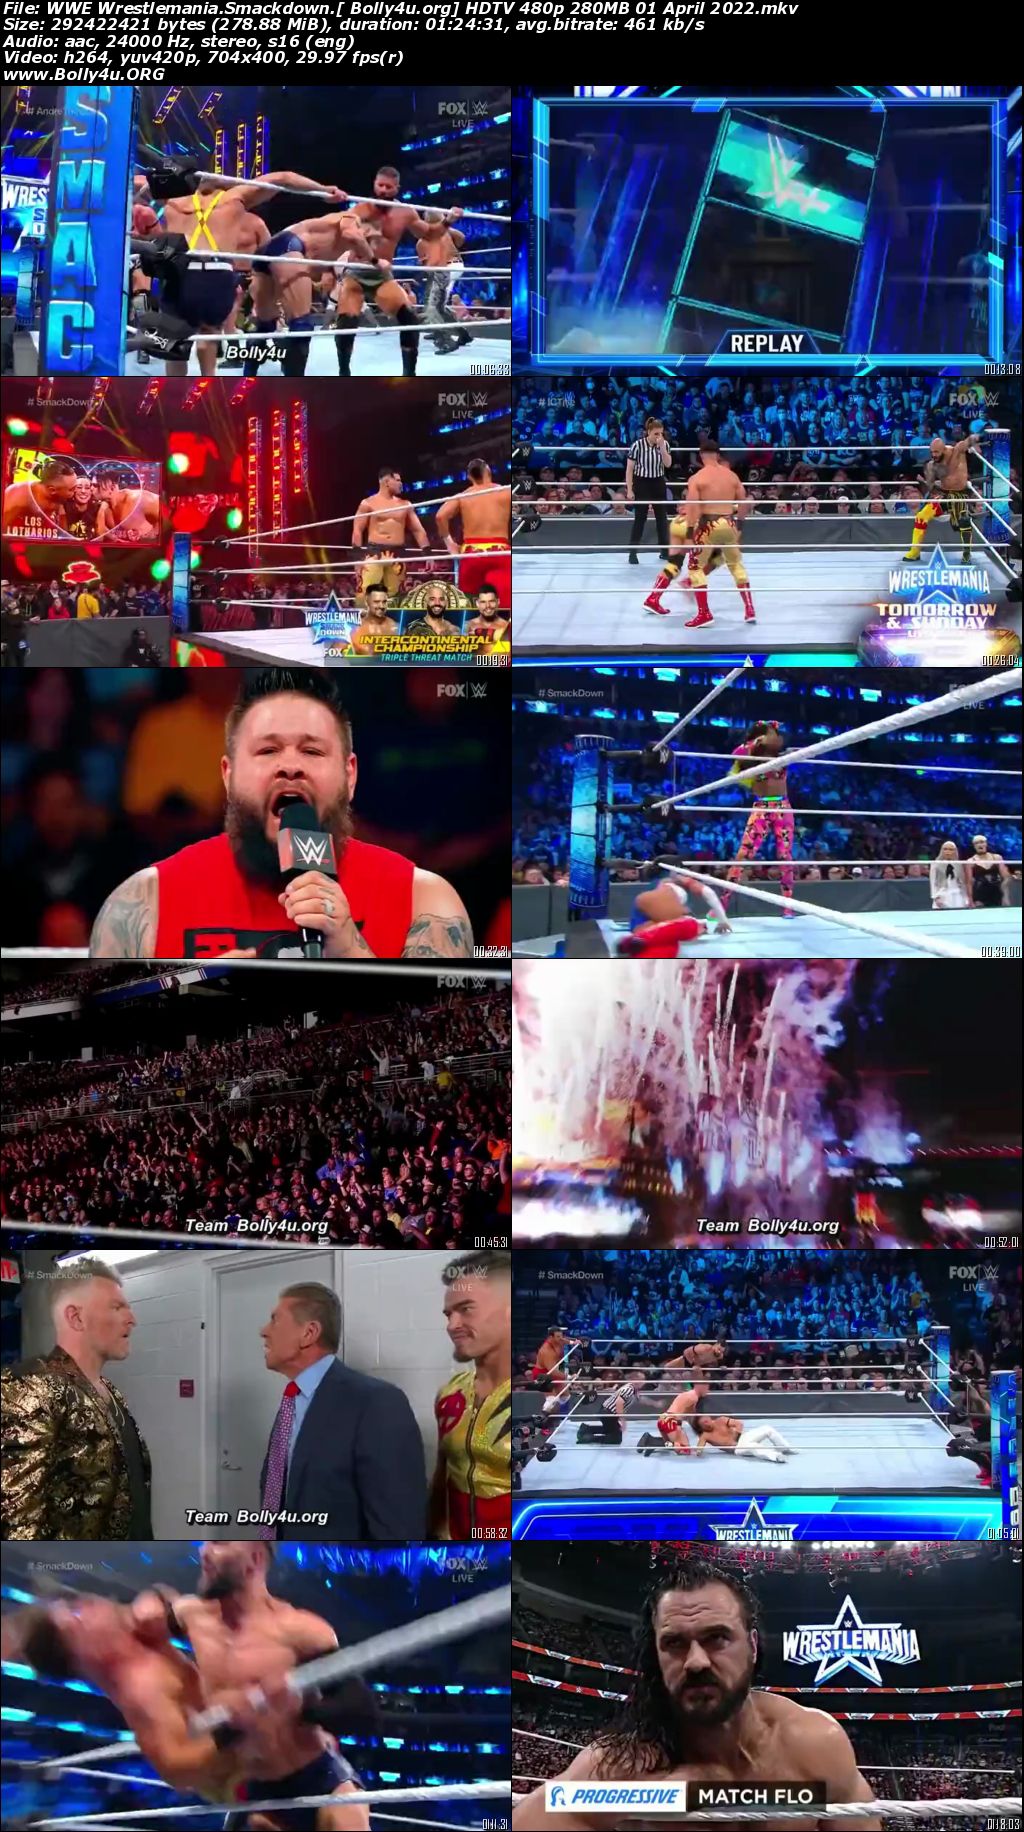 WWE Wrestlemania Smackdown HDTV 280Mb 480p 01 April 2022 Download